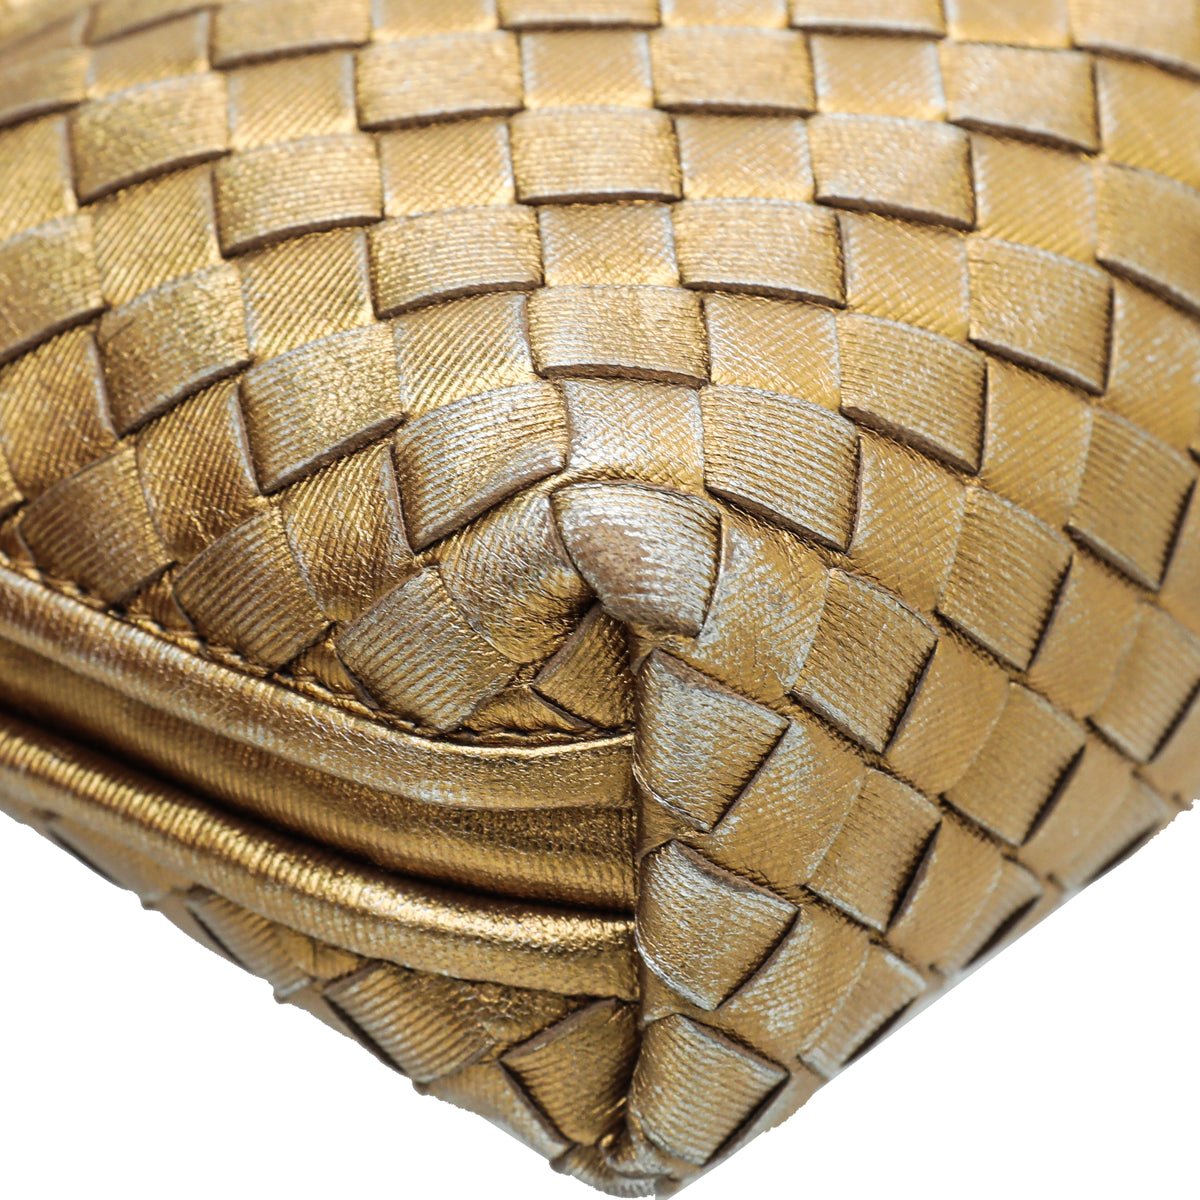 Celine - Bottega Veneta Metallic Gold Intrecciato Nodini Crossbody Bag | The Closet